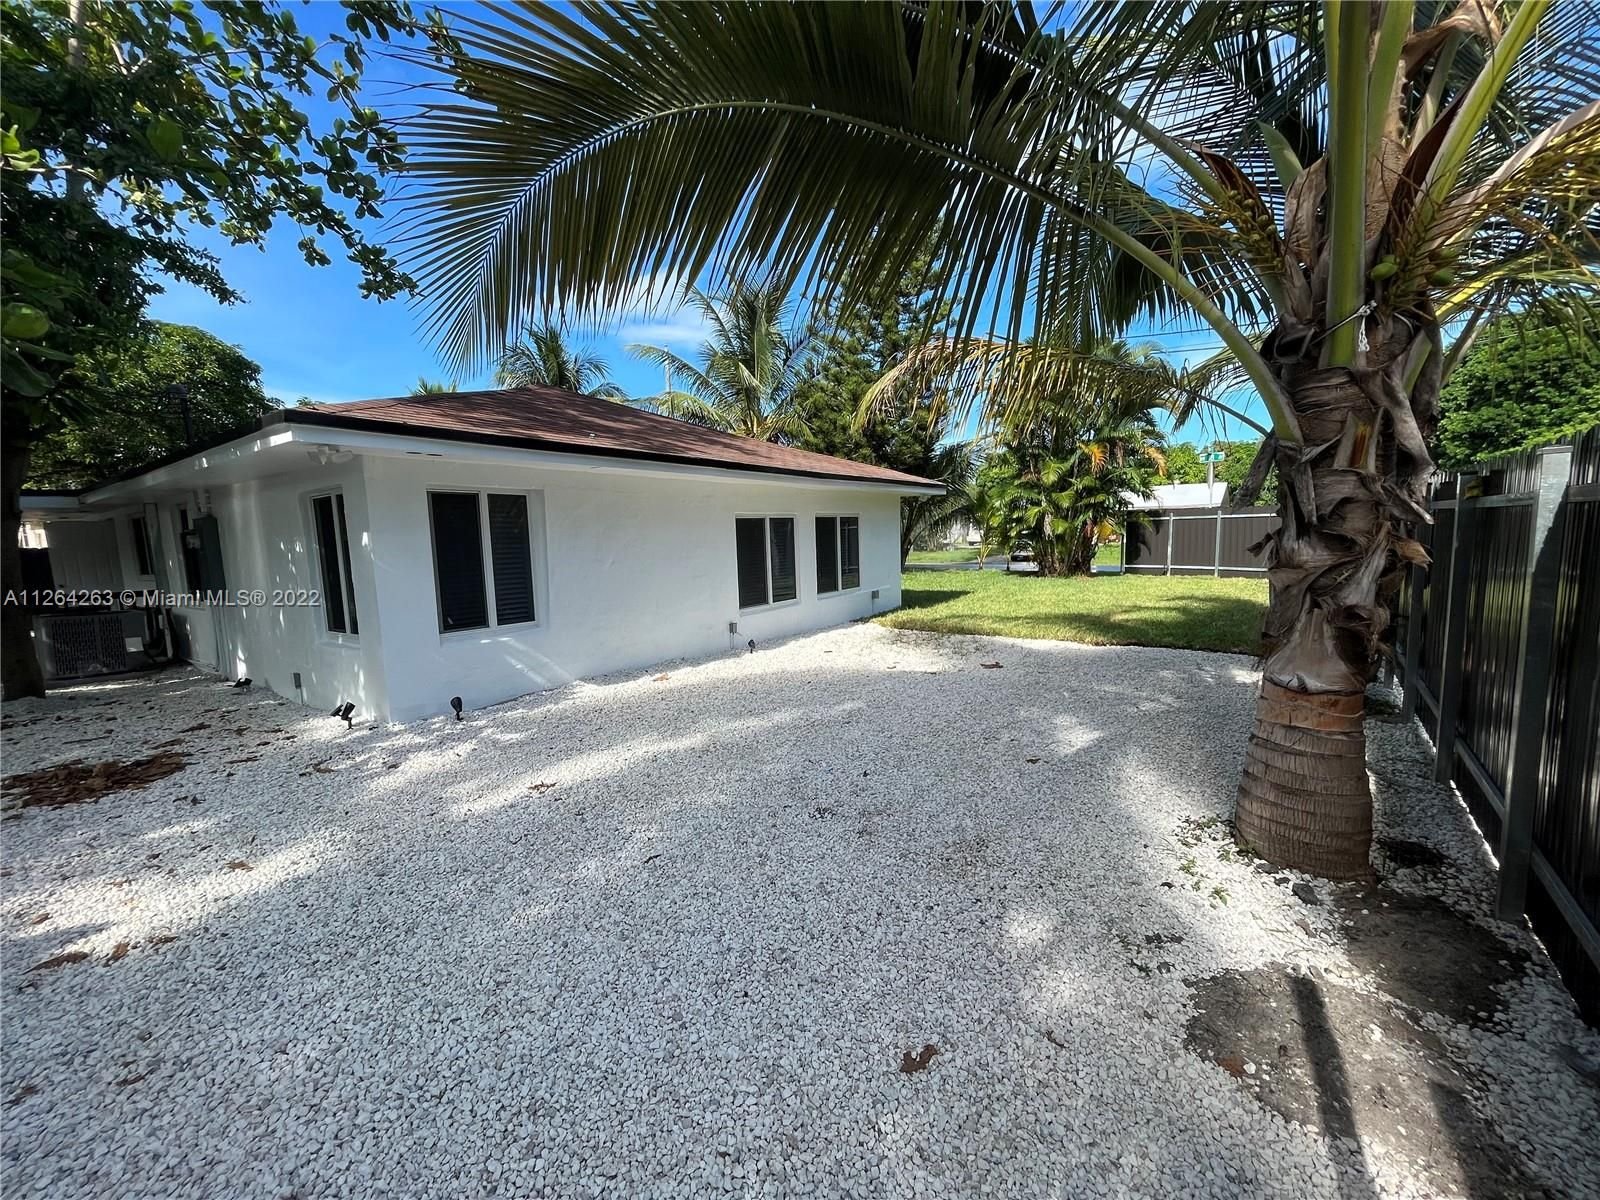 Real estate property located at 10702 18th Ave, Miami-Dade County, Miami, FL